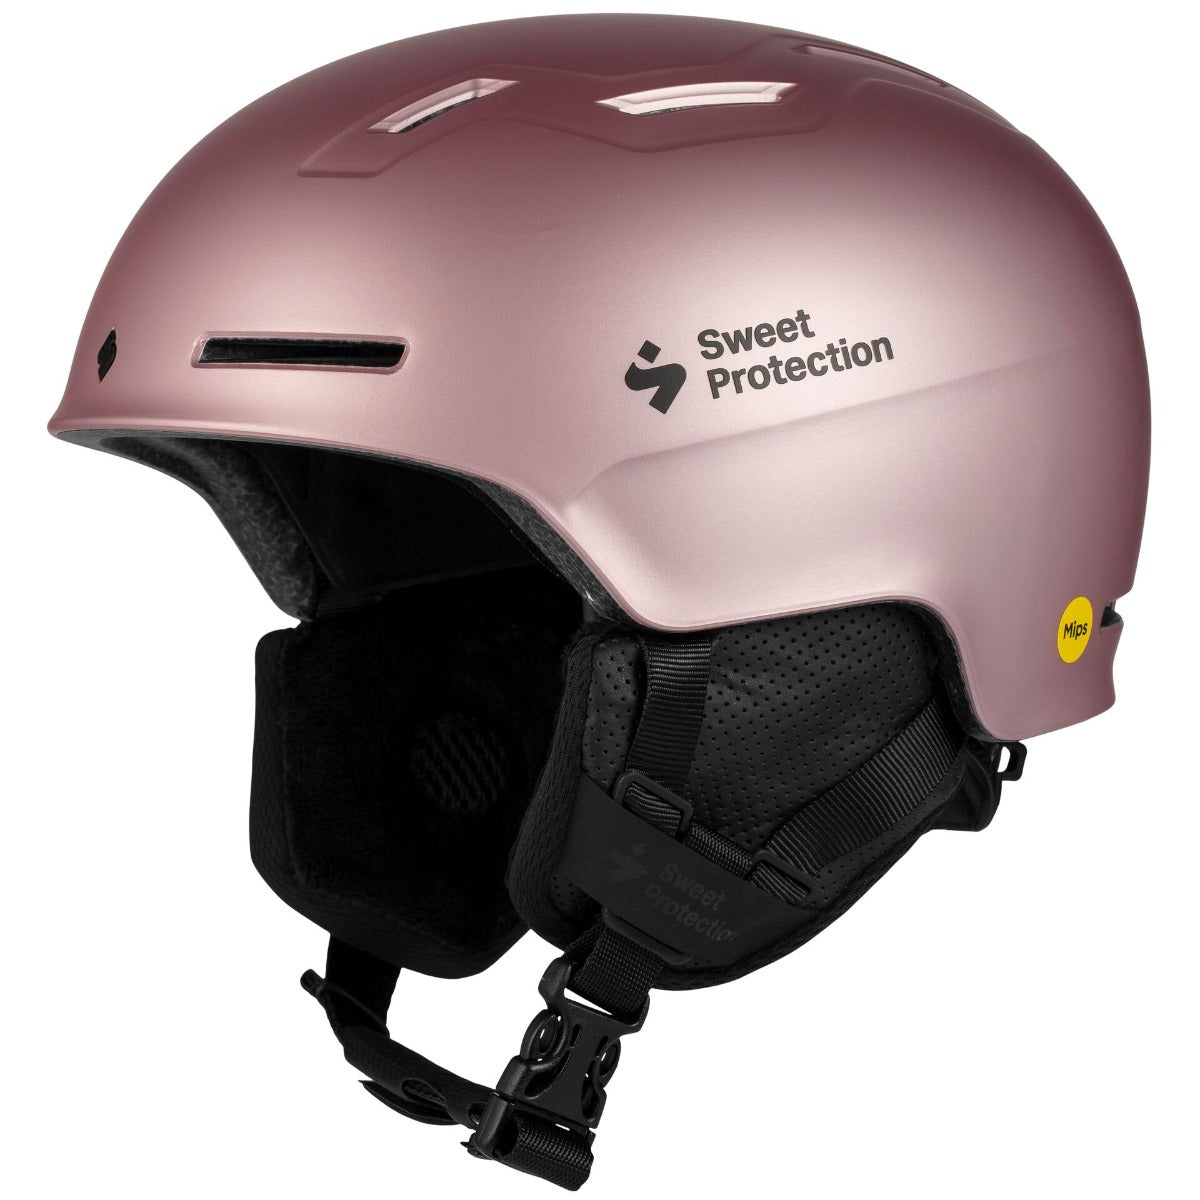 Sweet Protection Winder MIPS Ski Helmet Jnr - Rose Gold Metallic